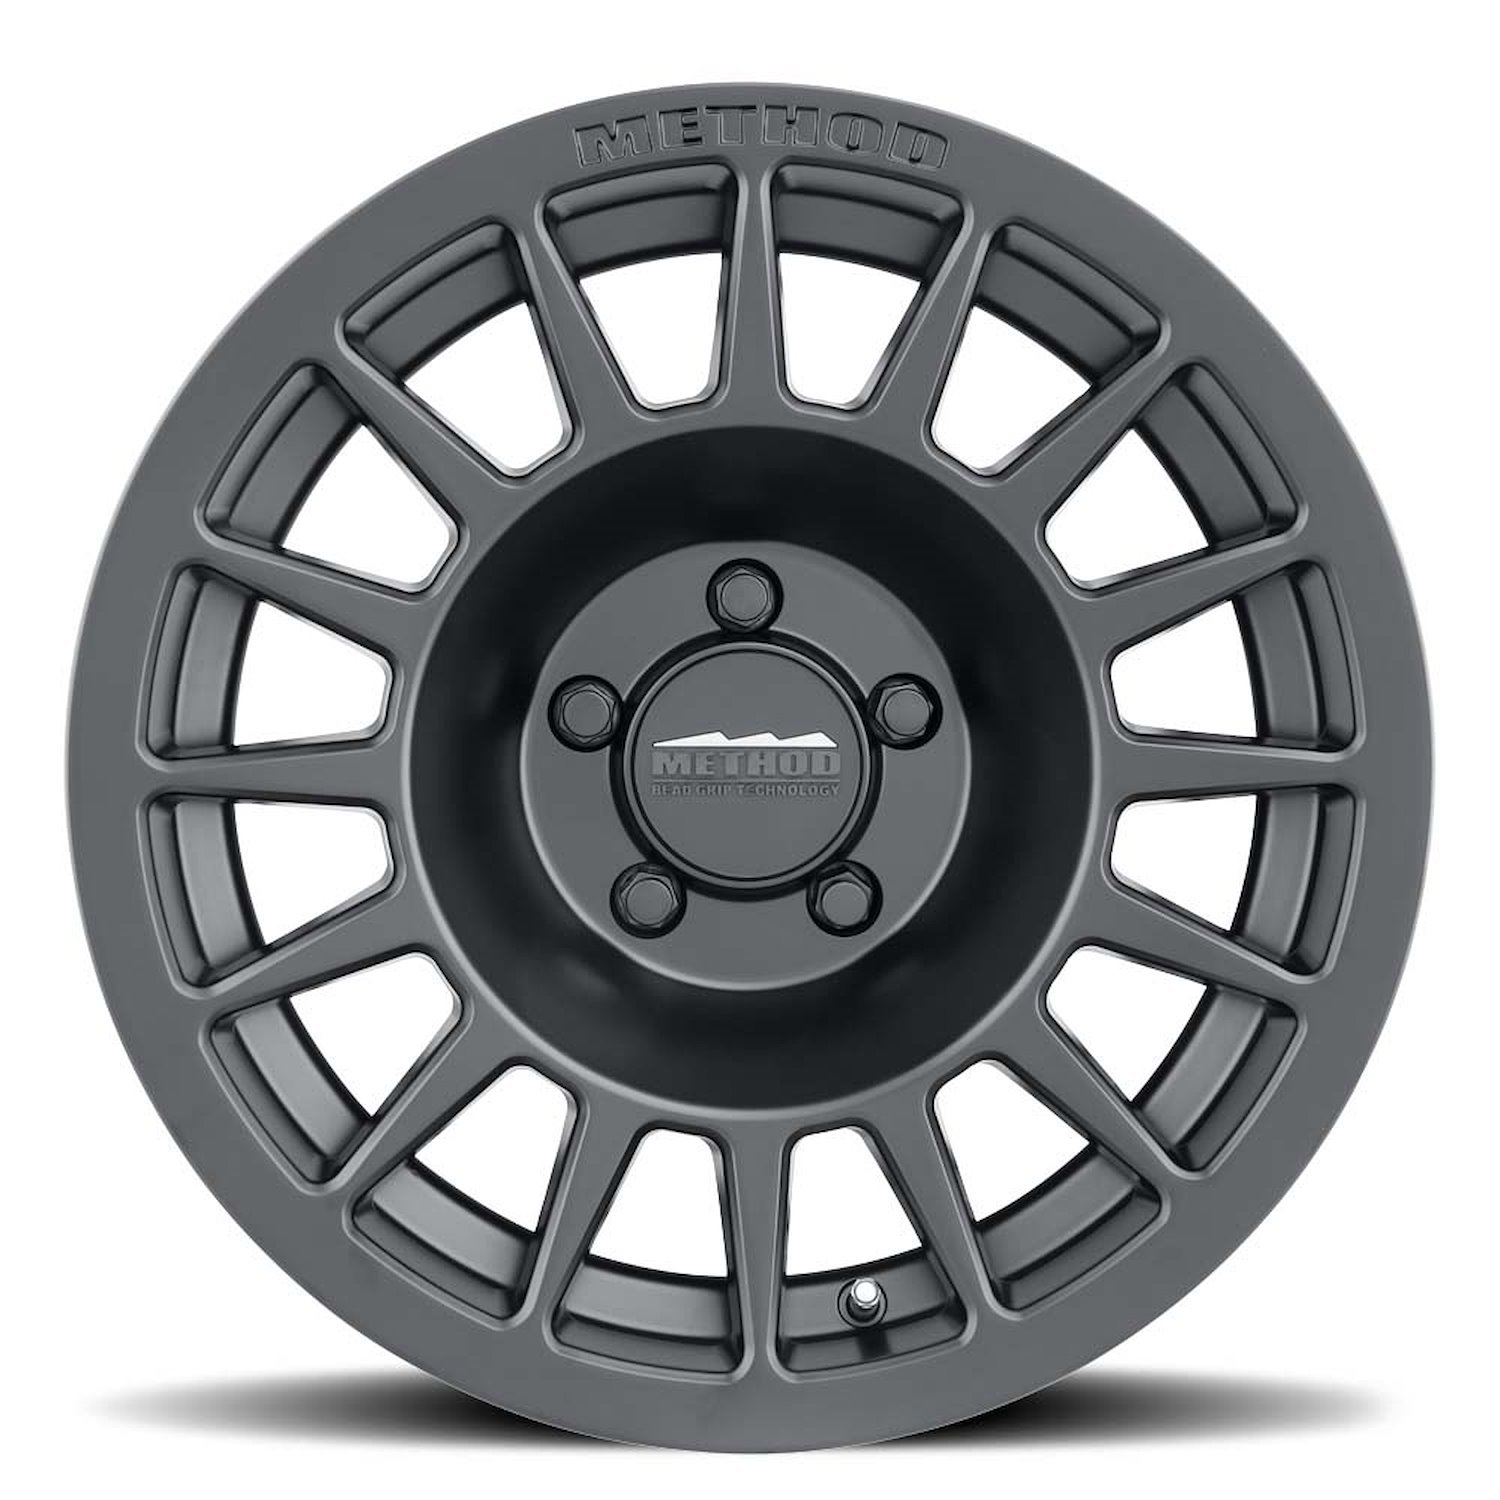 MR70778555500 TRAIL MR707 Bead Grip Wheel [Size: 17" x 8.5"] Matte Black